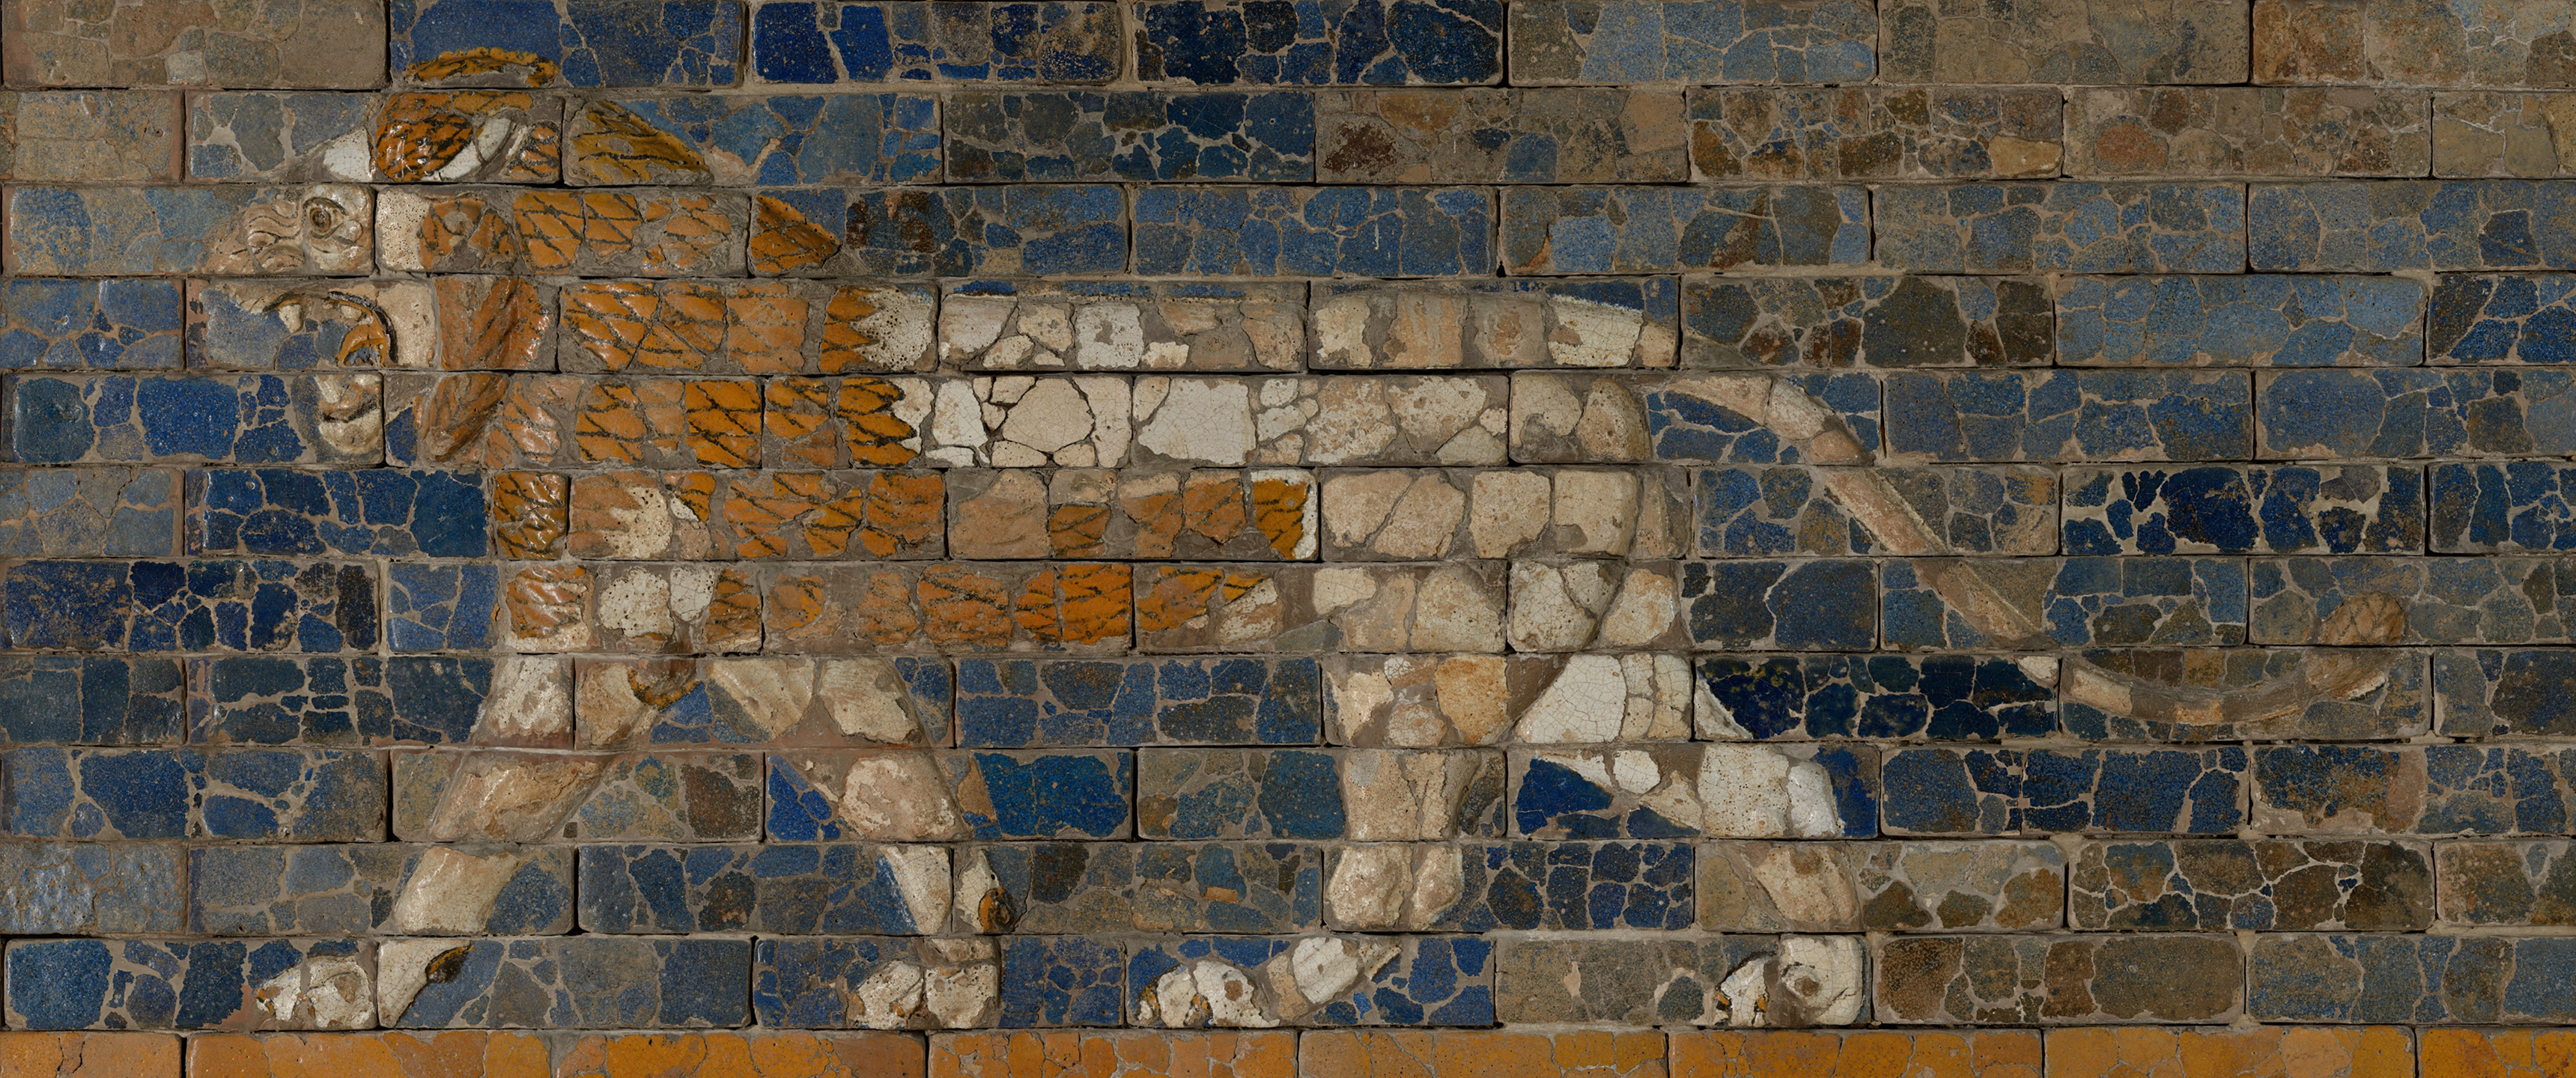 General 3440x1440 mural mosaic lion ultrawide Babylonian bricks artwork